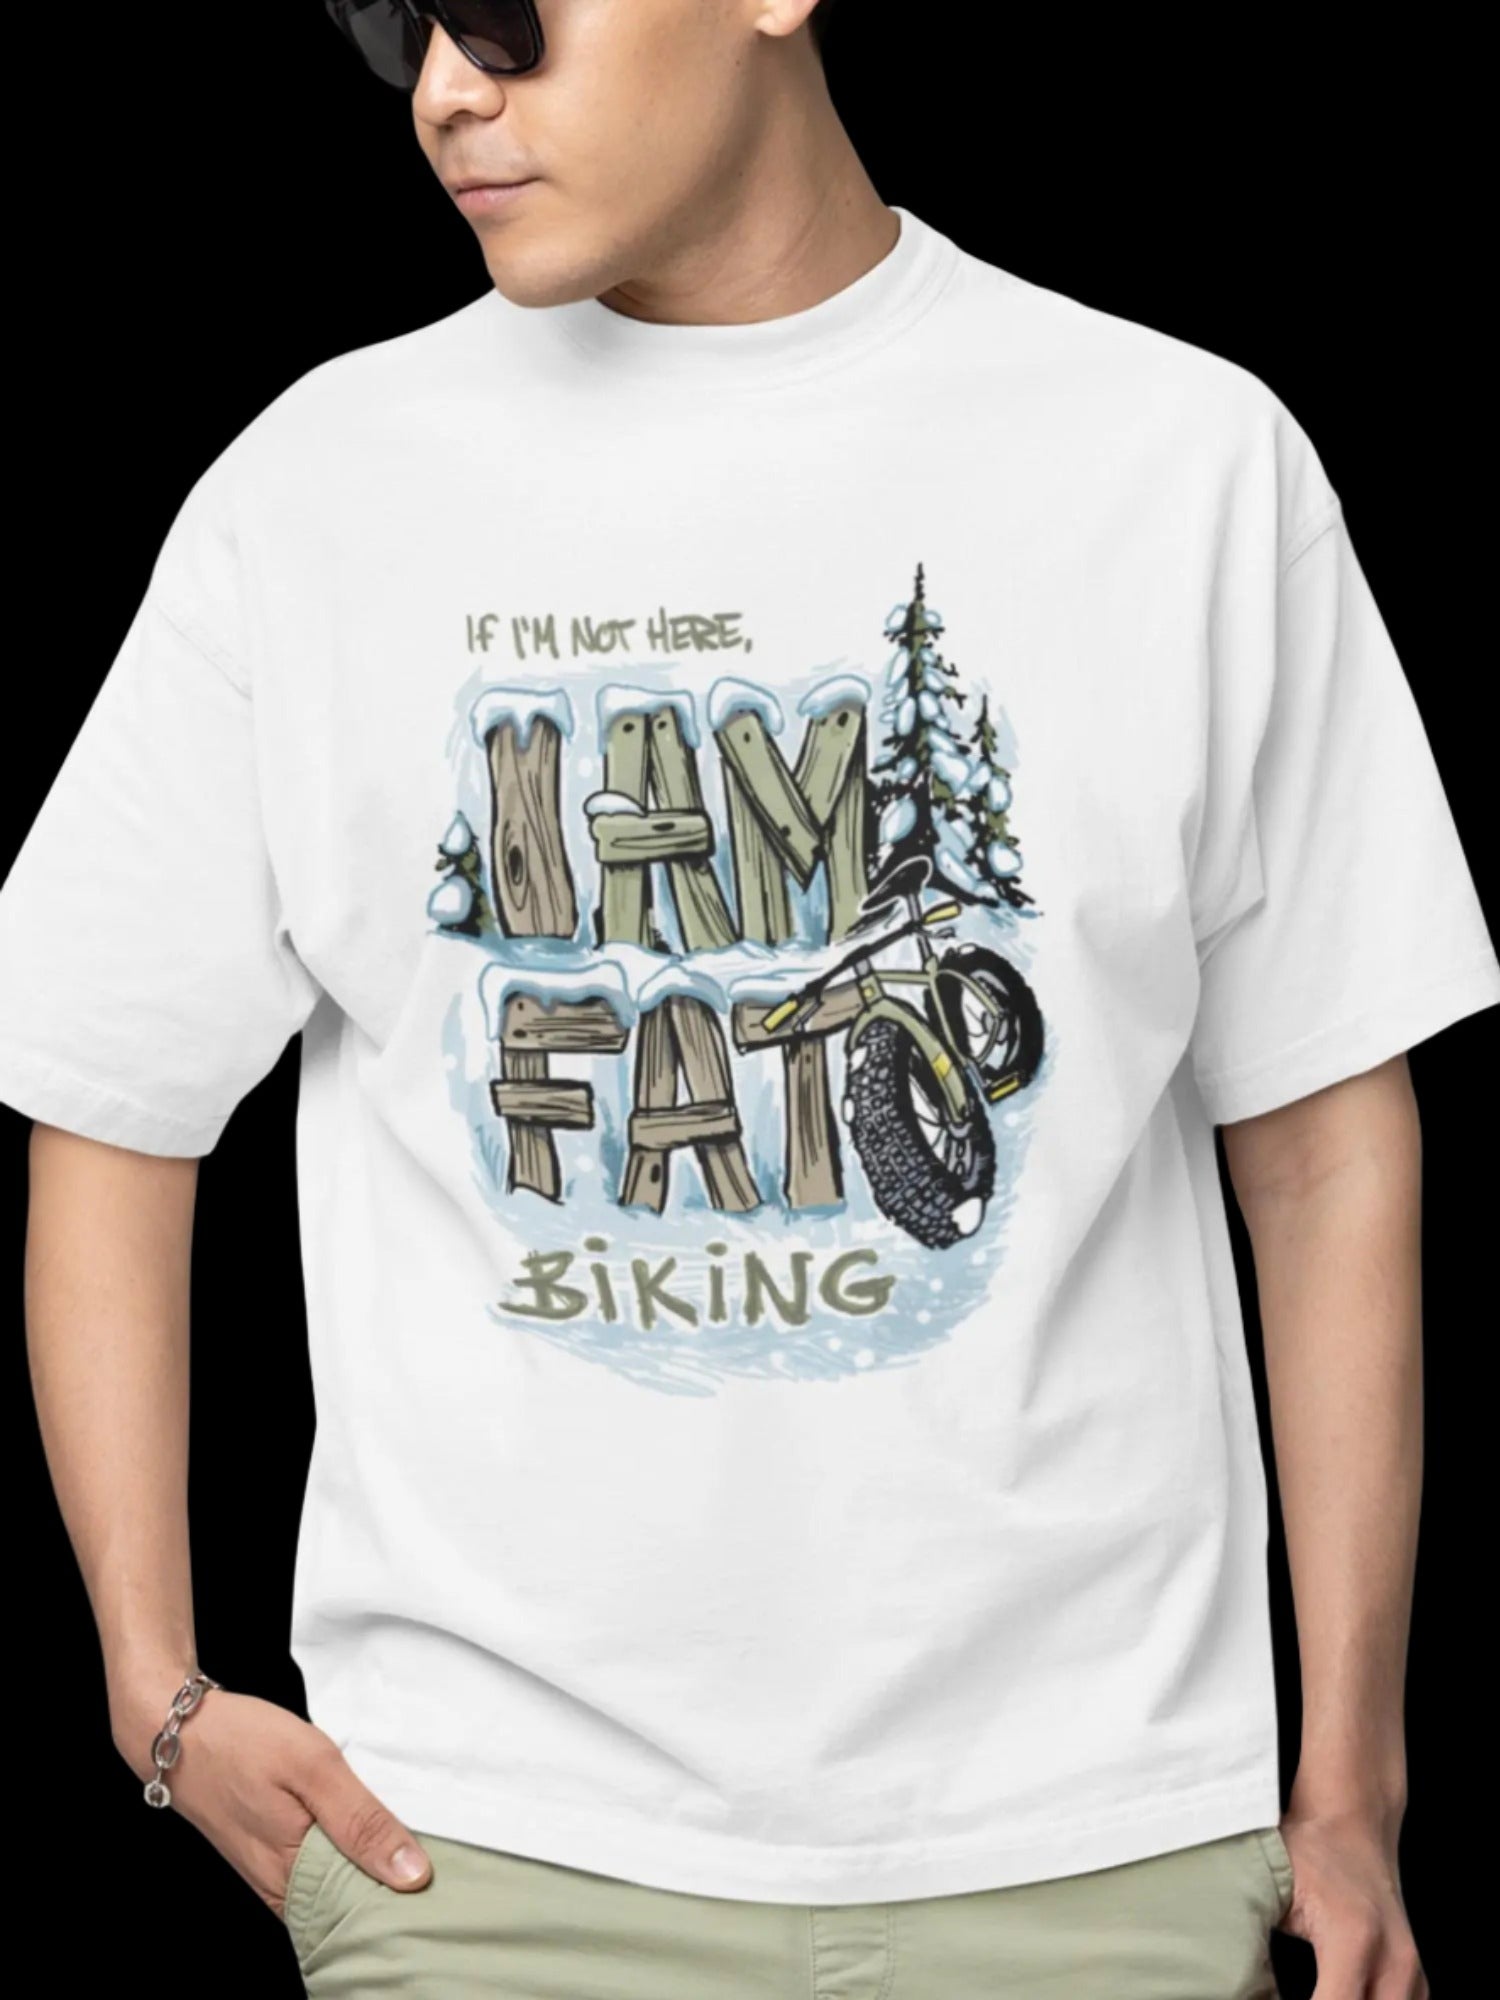 If I'm Not Here I'm Fatbiking - Fatbike t-shirt